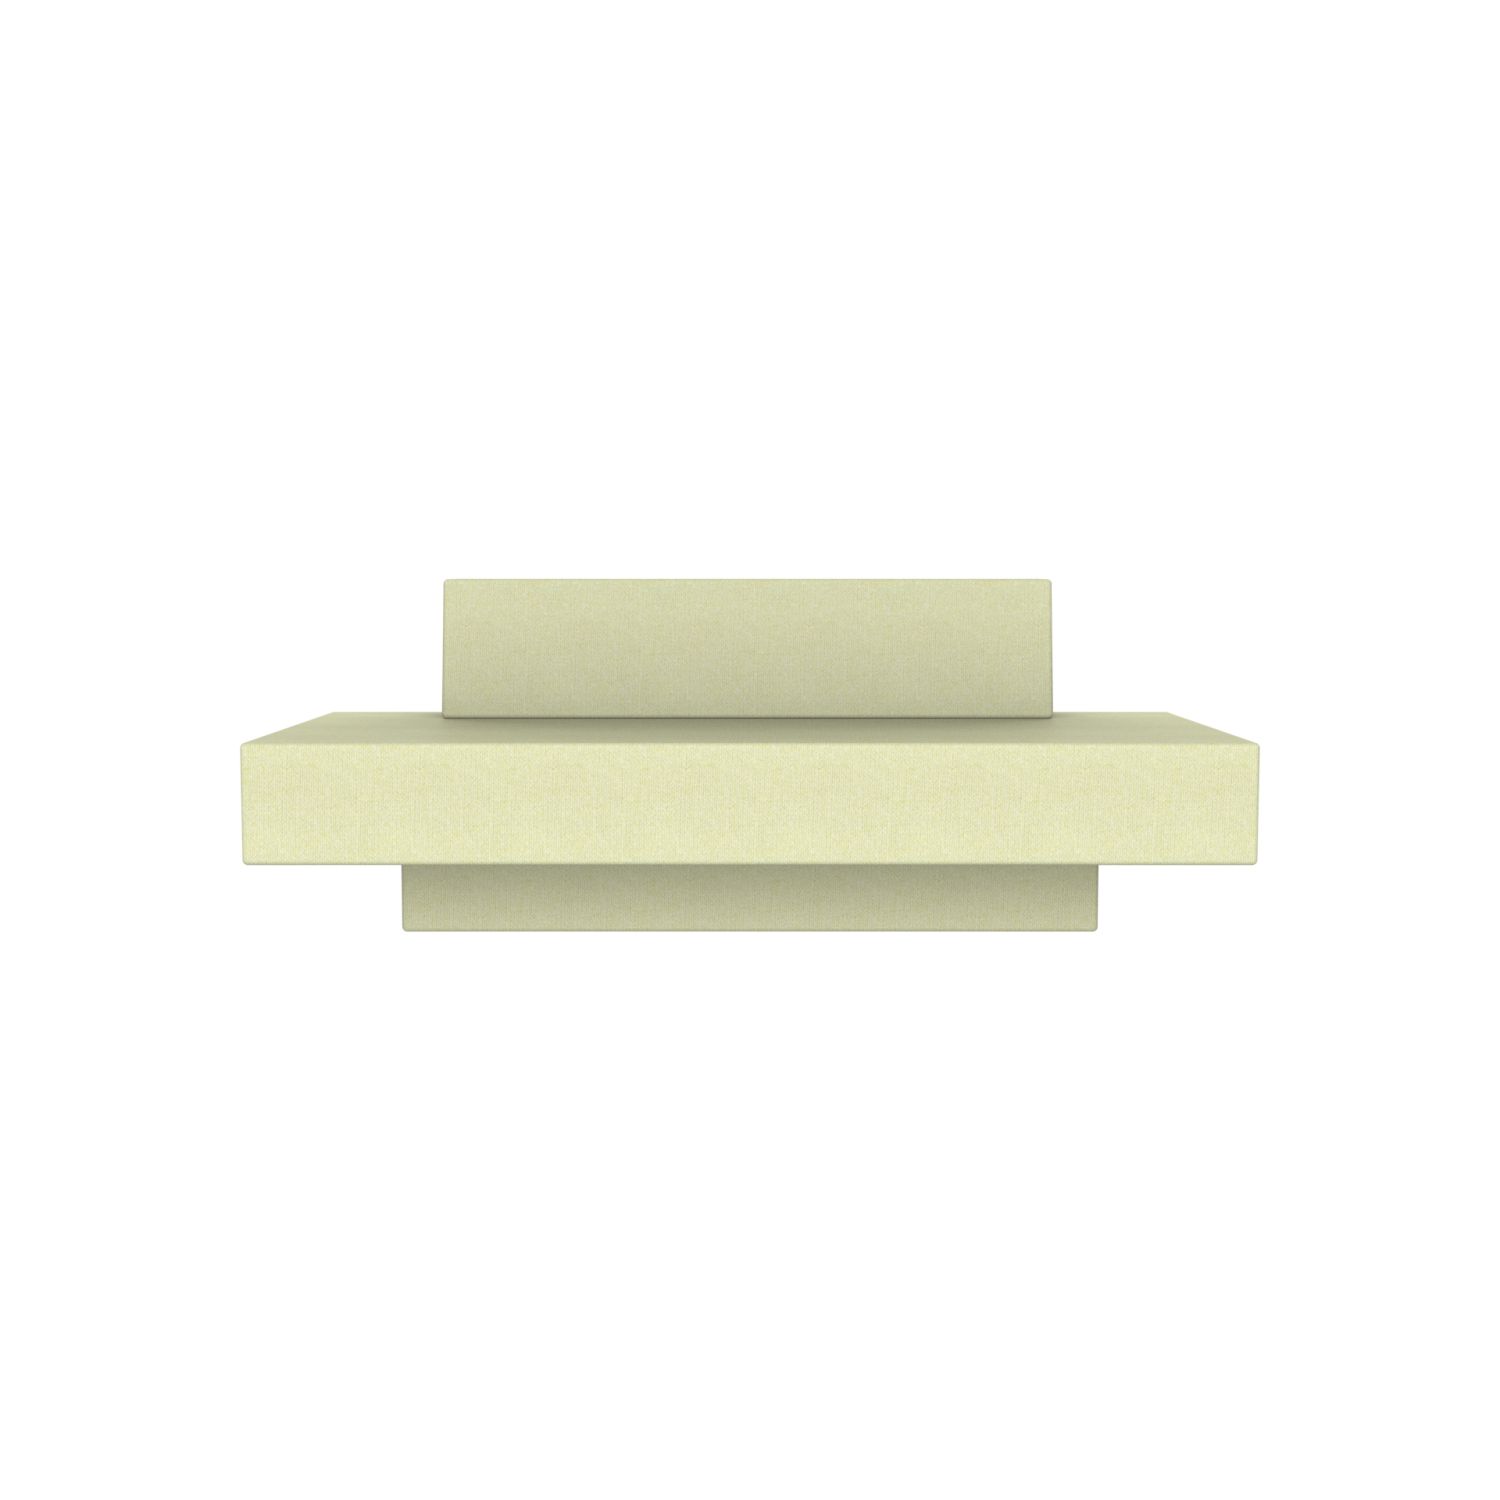 lensvelt atelier van lieshout glyder sofa with sliding backrest 85 x 190 cm moss ivory 30 price level 2